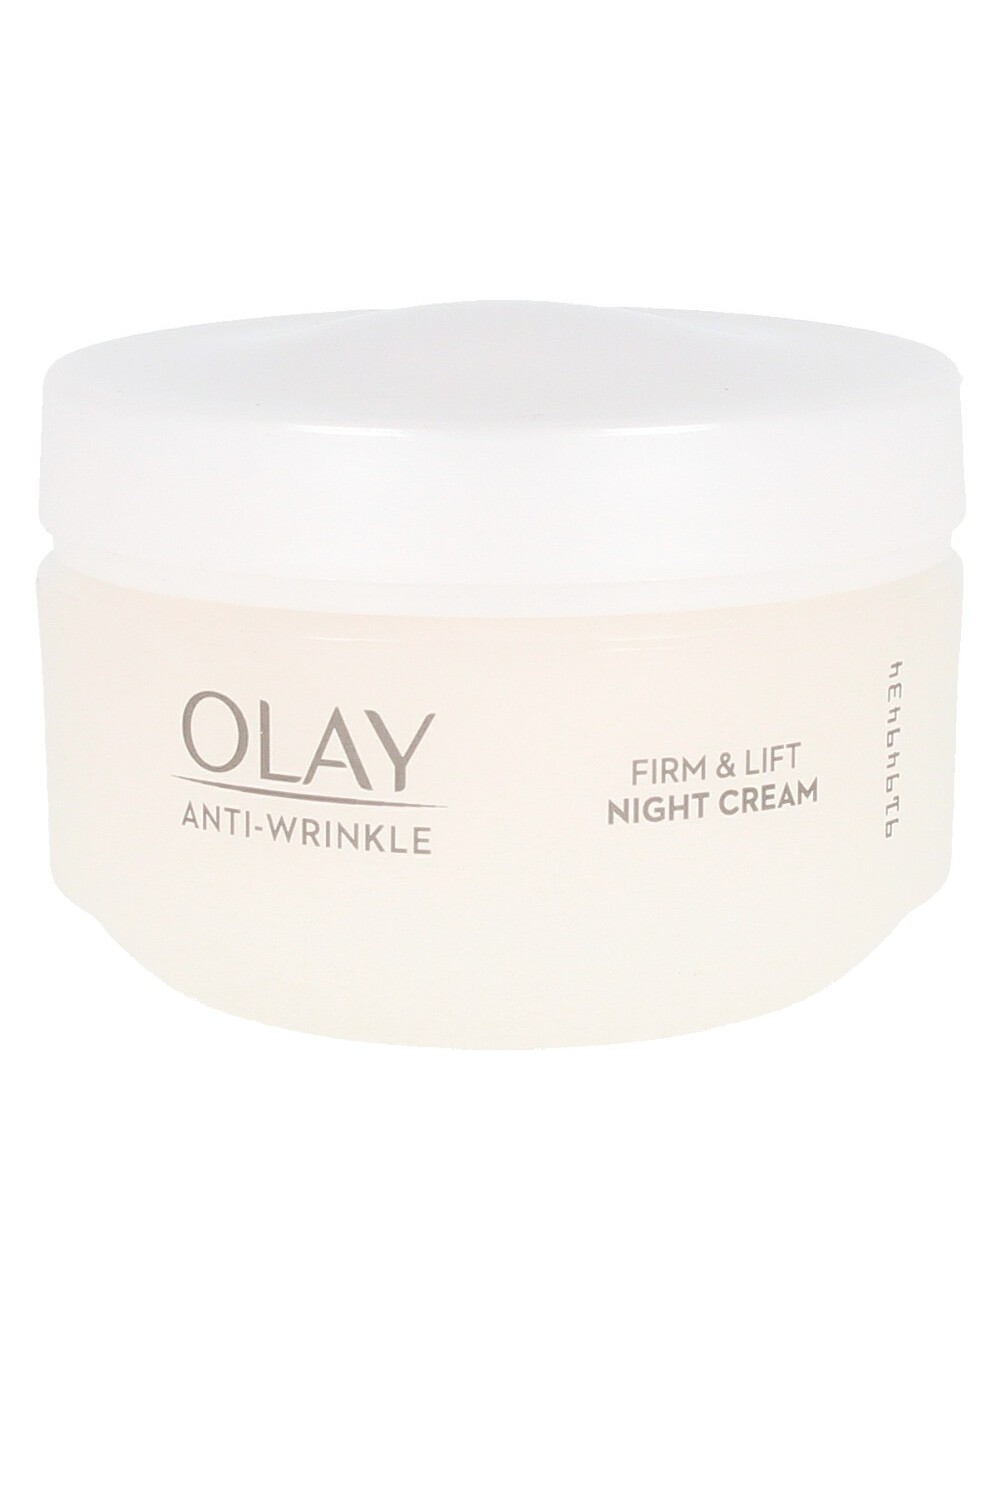 Olay Firm & Lift Anti-Wrinkle Night Cream 50ml